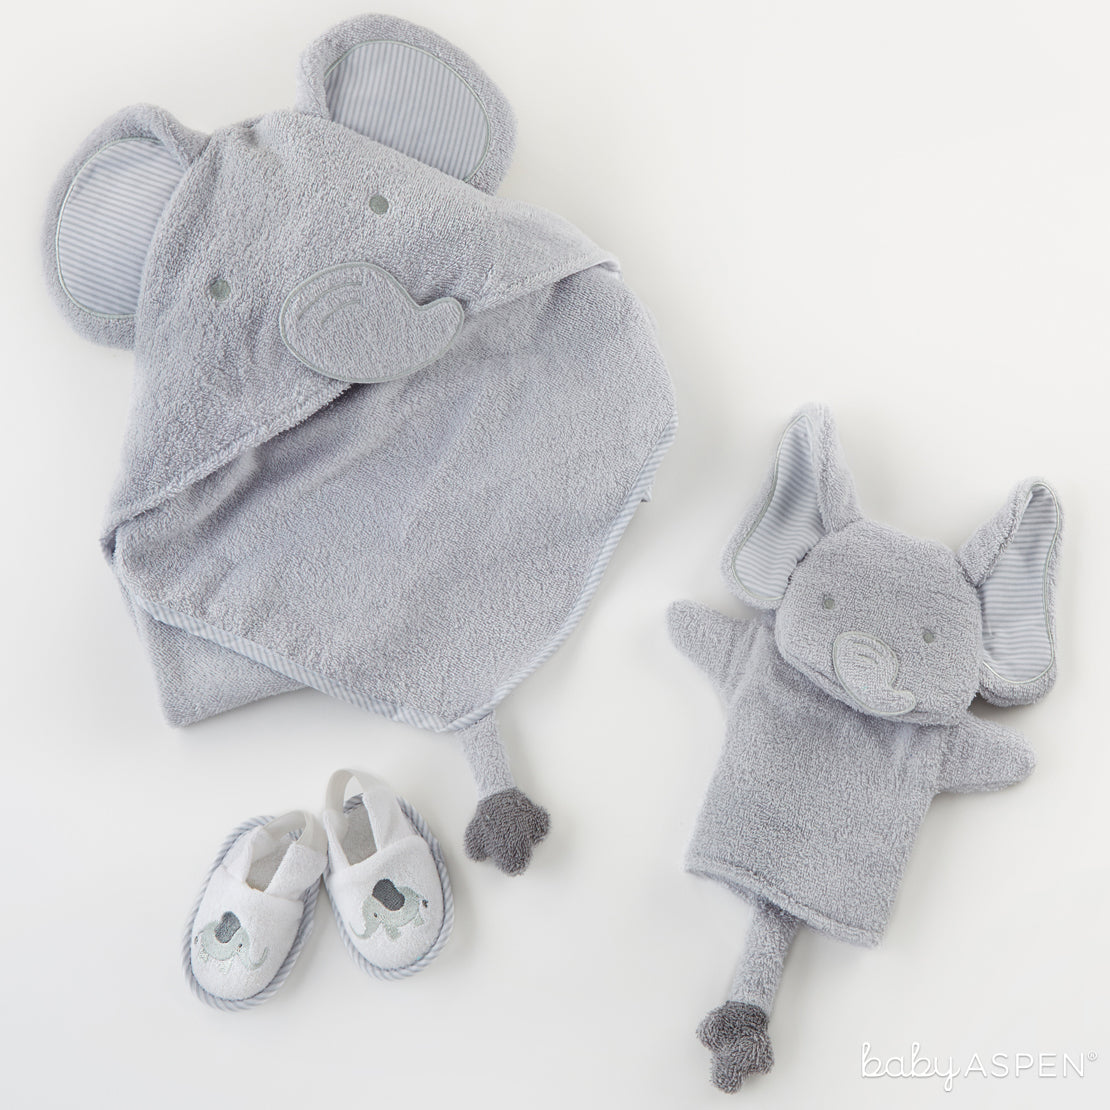 Elephant Bath Set Items | Sweet Elephant Themed Gifts For Your Little Peanut | Baby Aspen